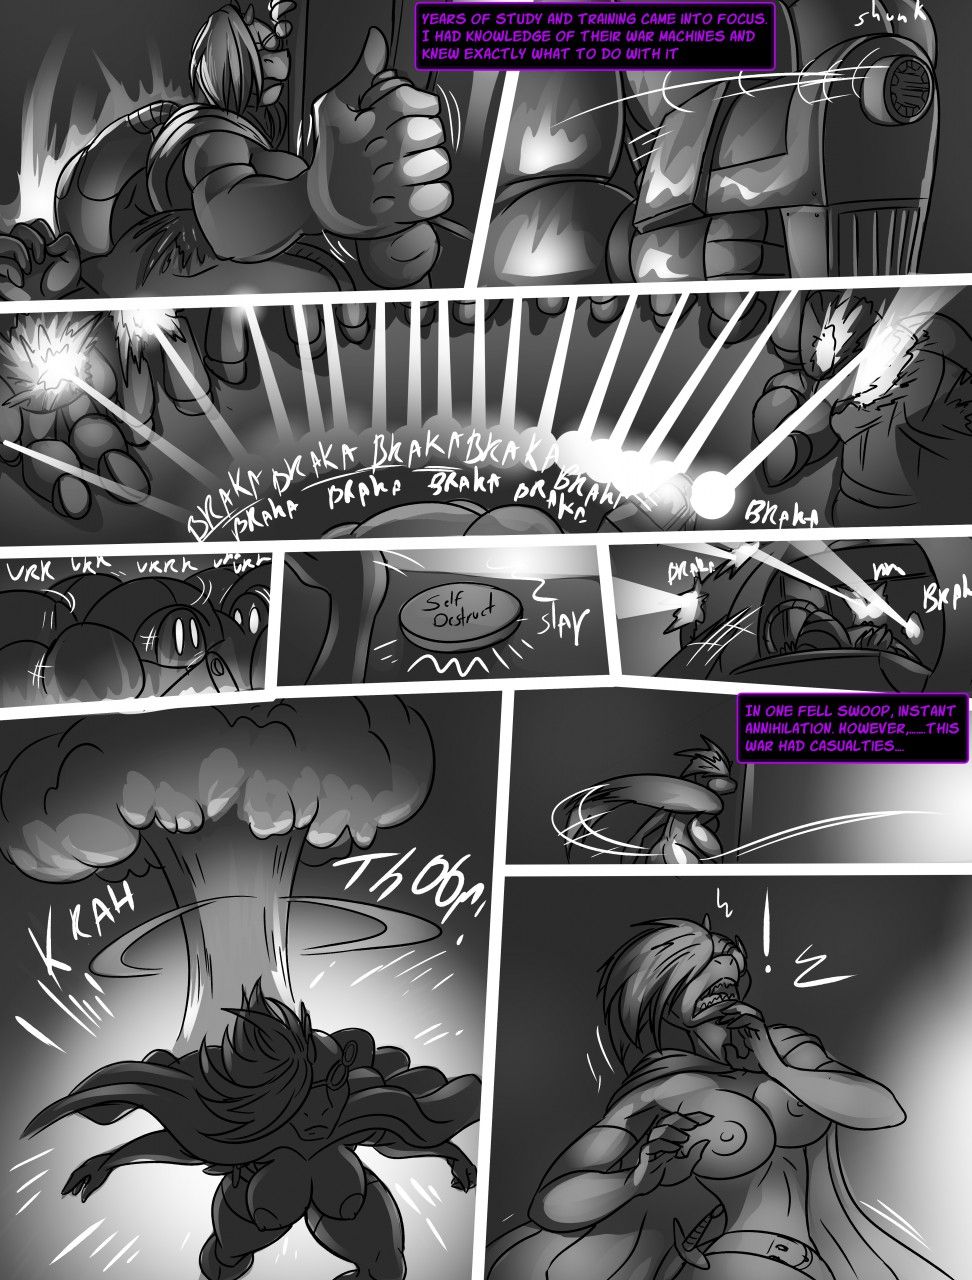 [TheBigBadWolf] Firedrive24 Comic: Rise of the Dark Goddess CH:1-3 (Ongoing) 14